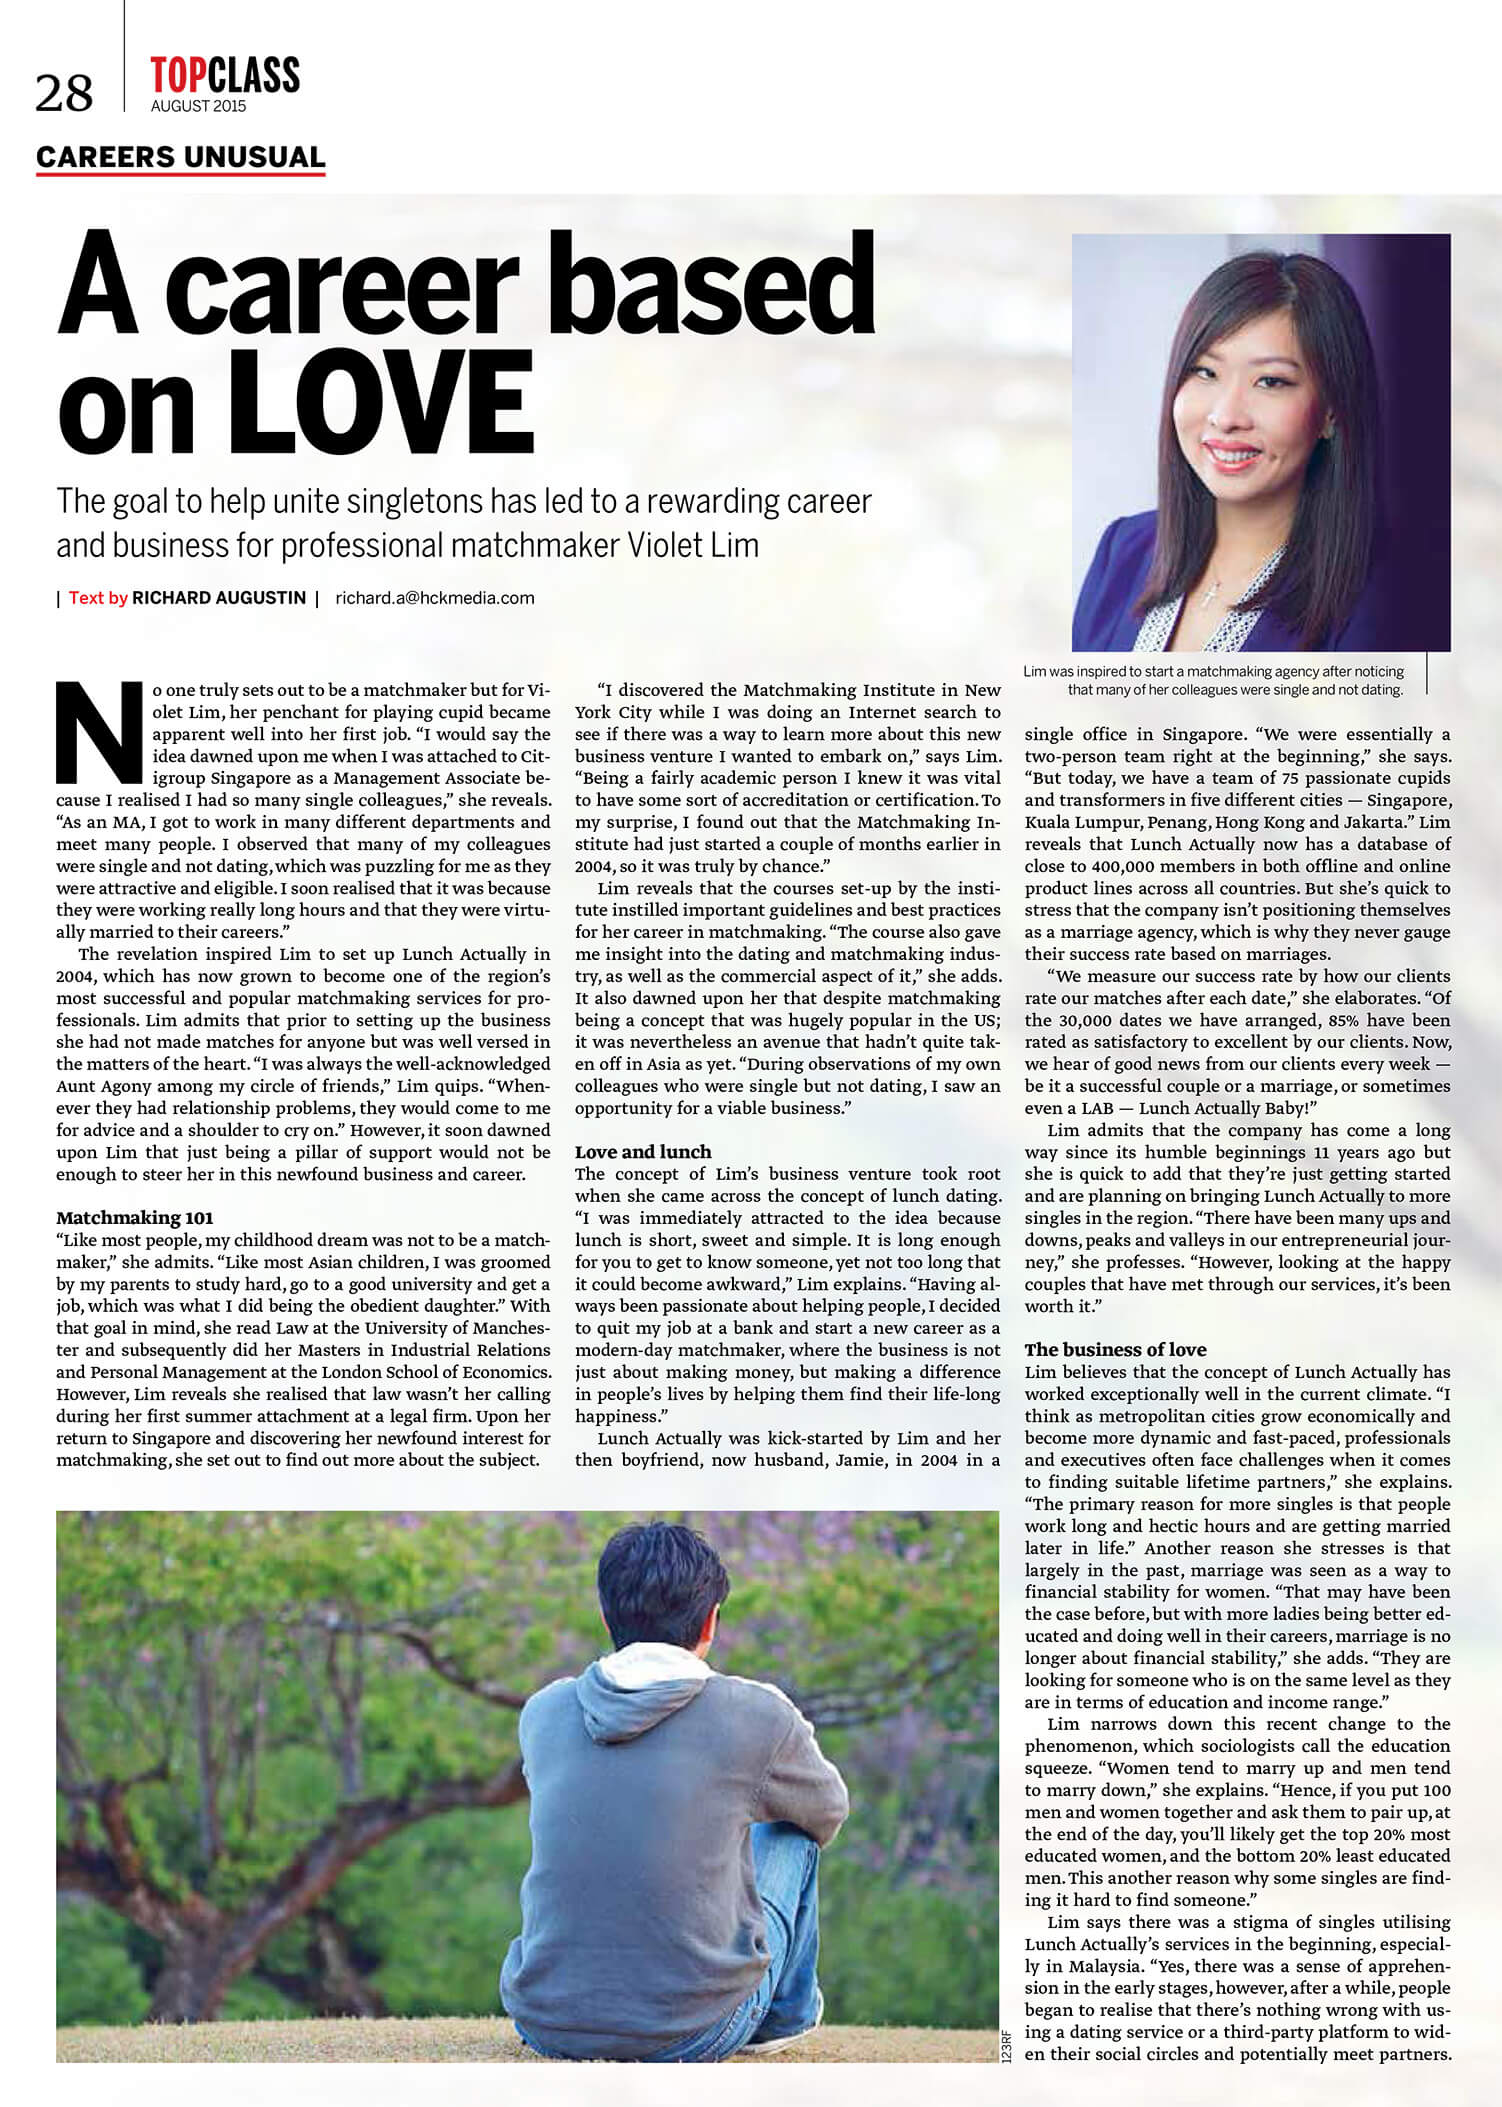 馬來西亞 Focus Malaysia 雜誌專訪